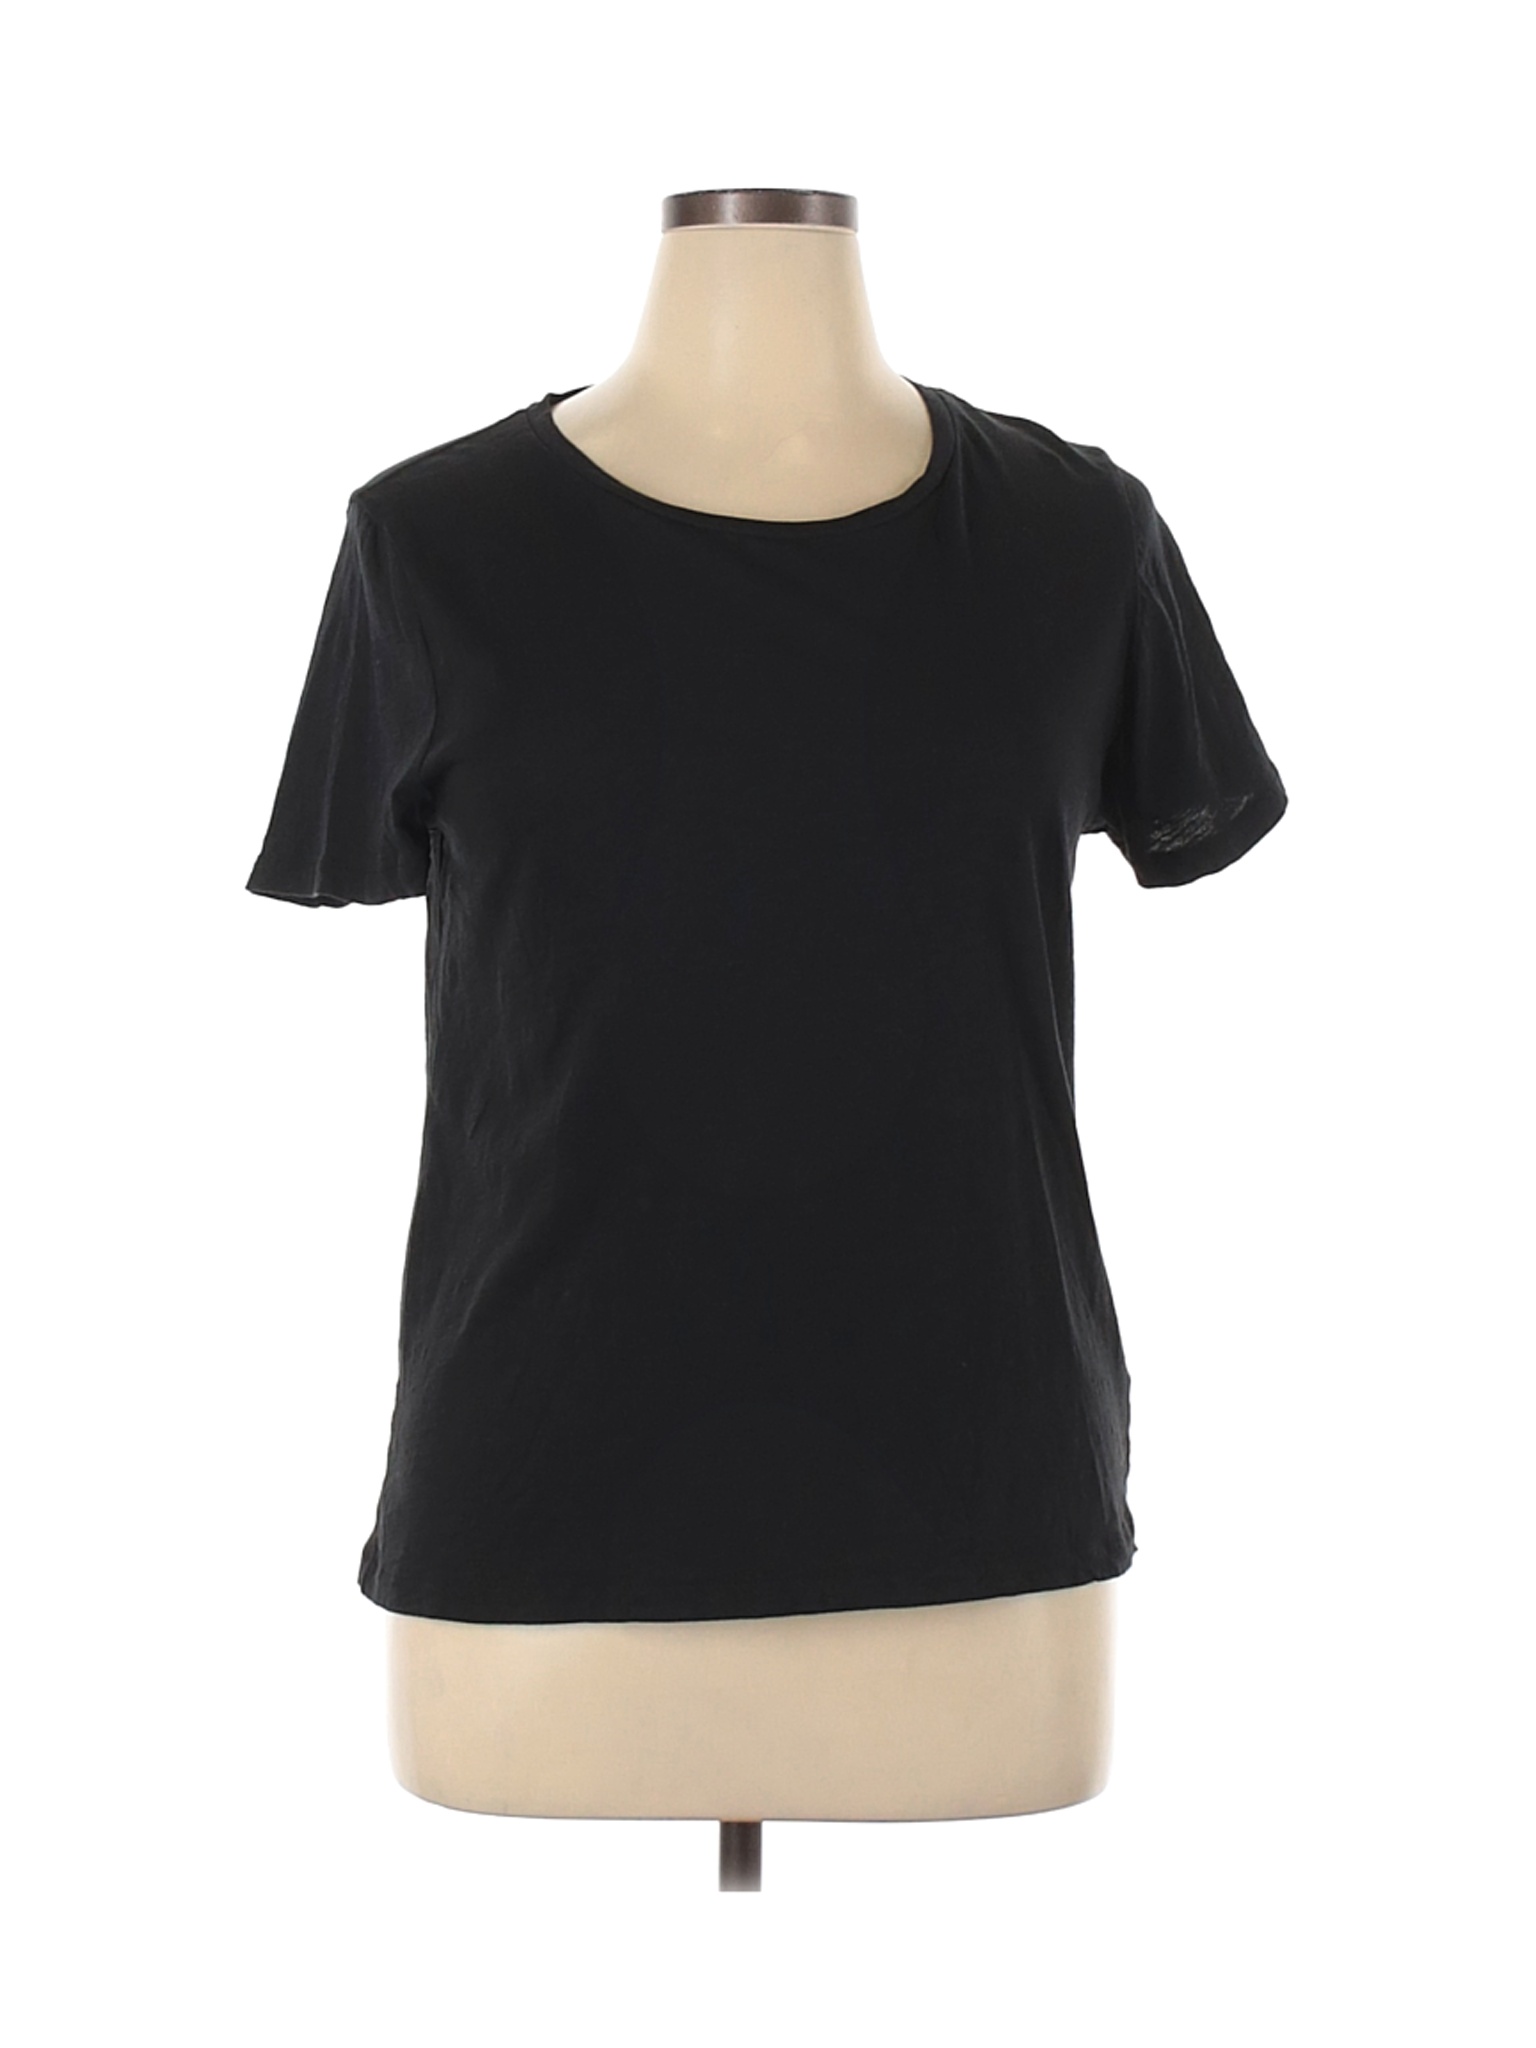 J.Crew Women Black Short Sleeve T-Shirt XL | eBay